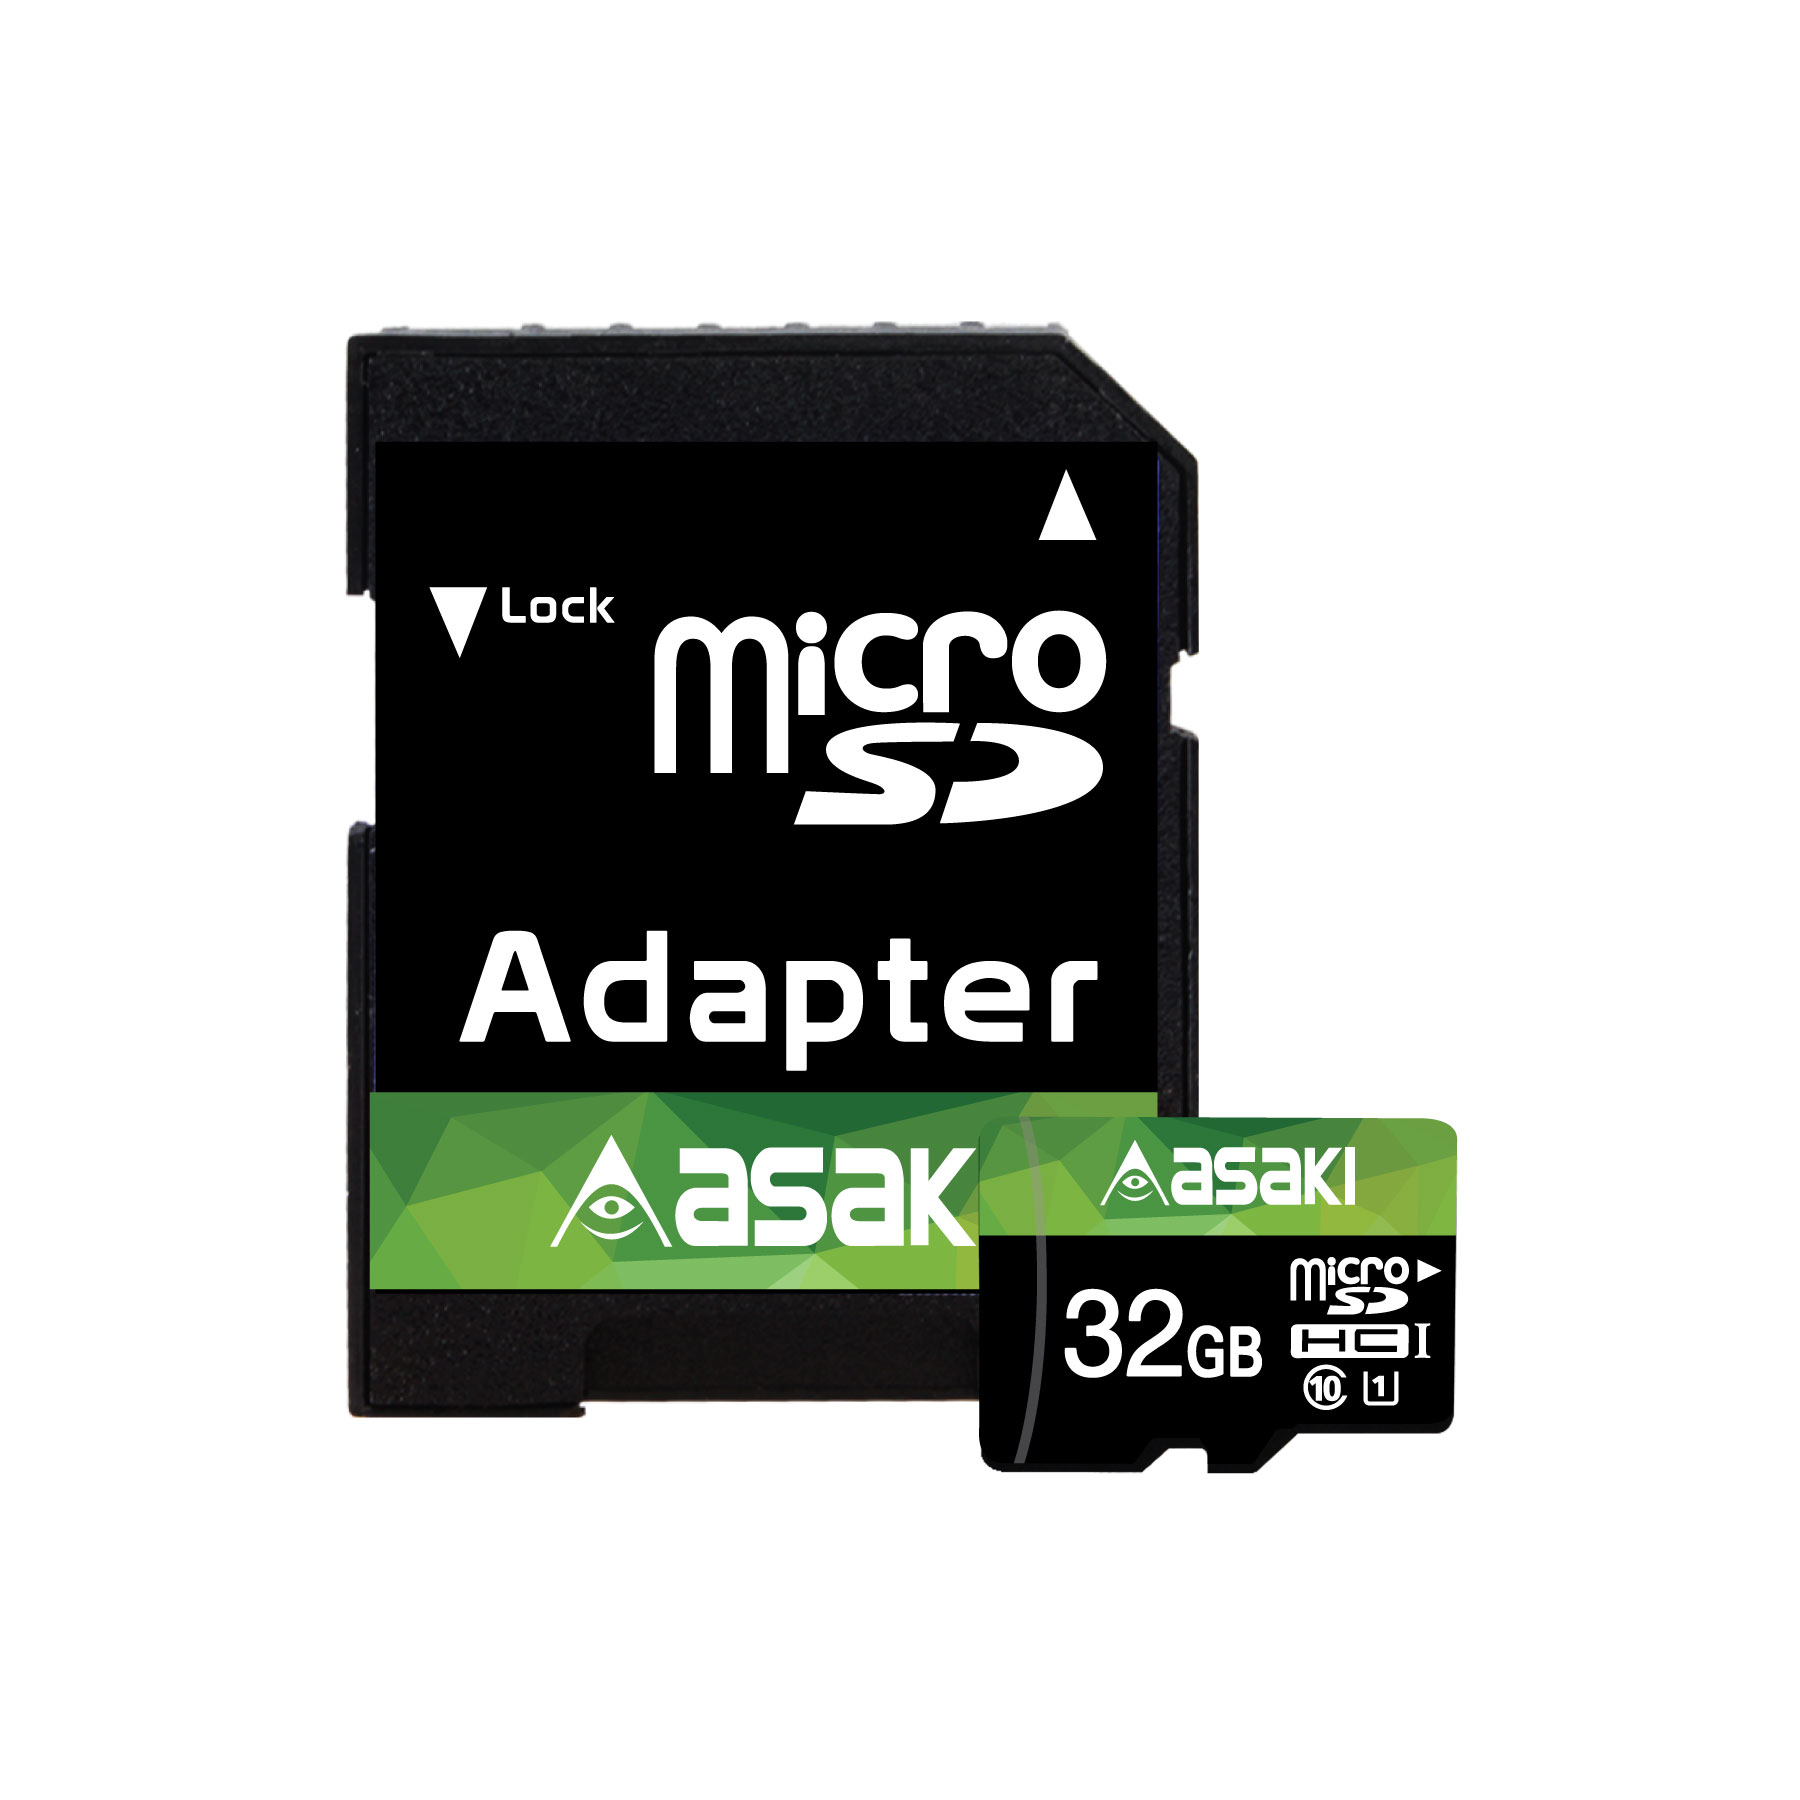 Asaki Memory Card การ์ดเก็บข้อมูล ความจุ 32 GB. รุ่น A-MU5000